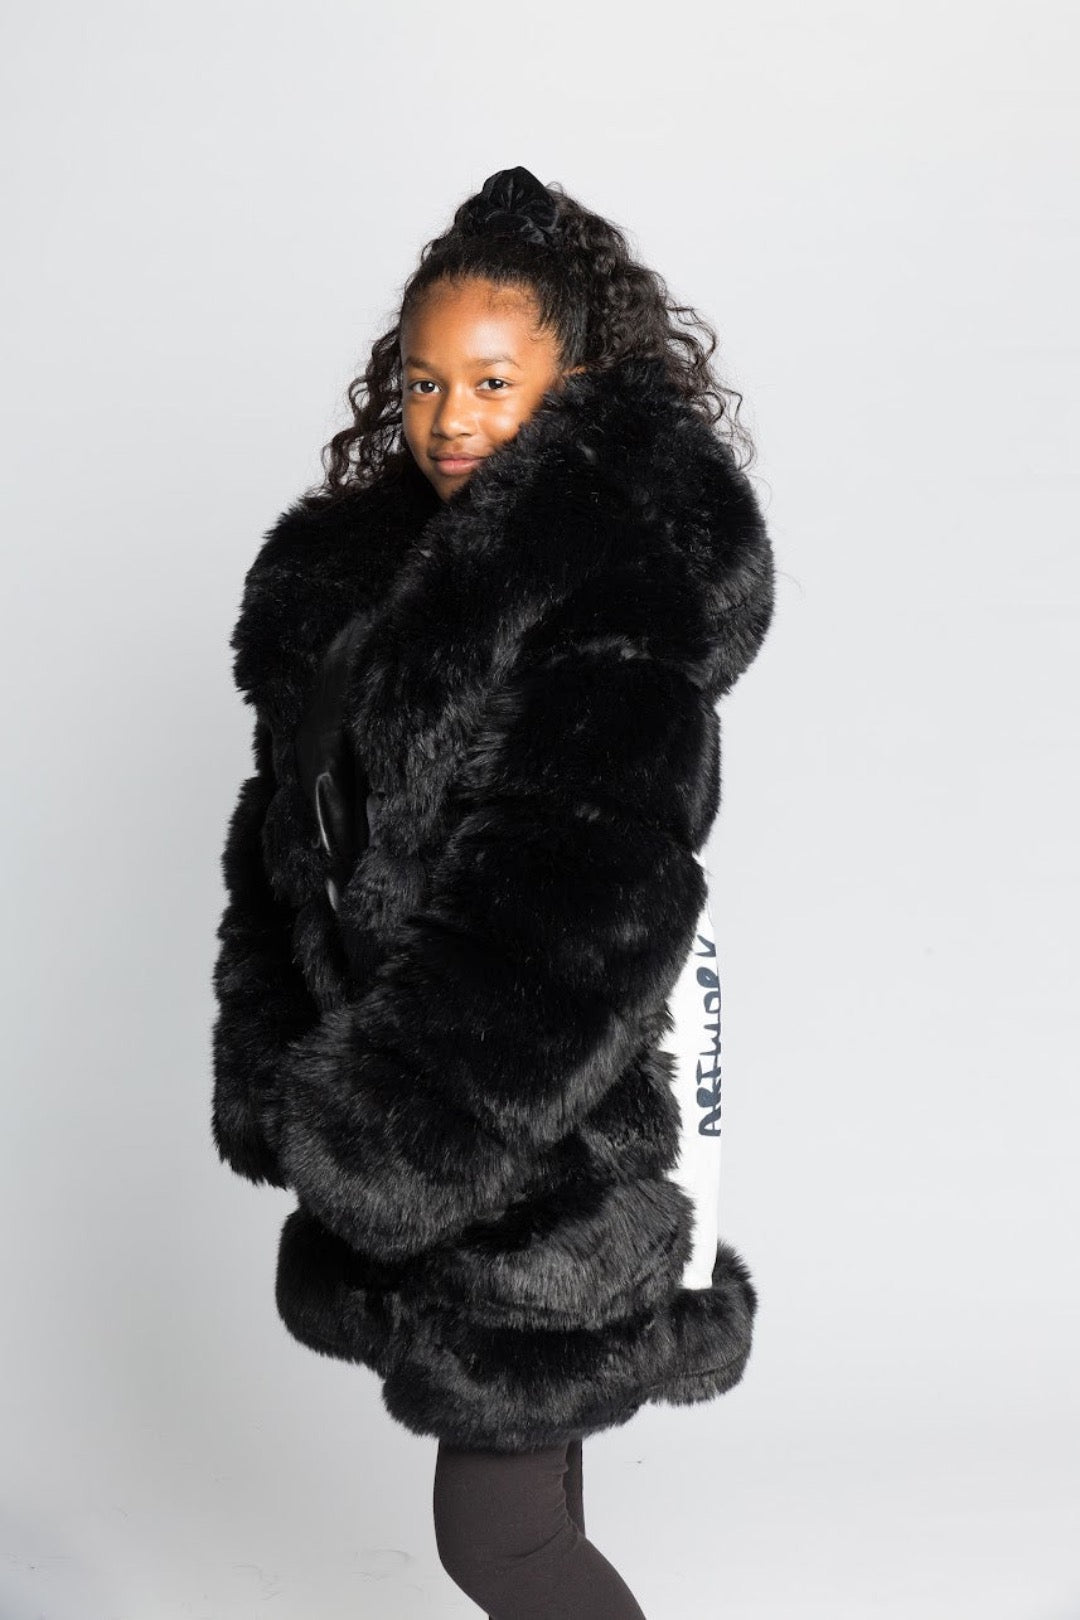 House of juniors, hoj, luxury, luxury faux fur, faux fur, vegan faux fur, black coat, black fur coat, heavy duty, girls faux fur, luxury fashion, high end fashion, 